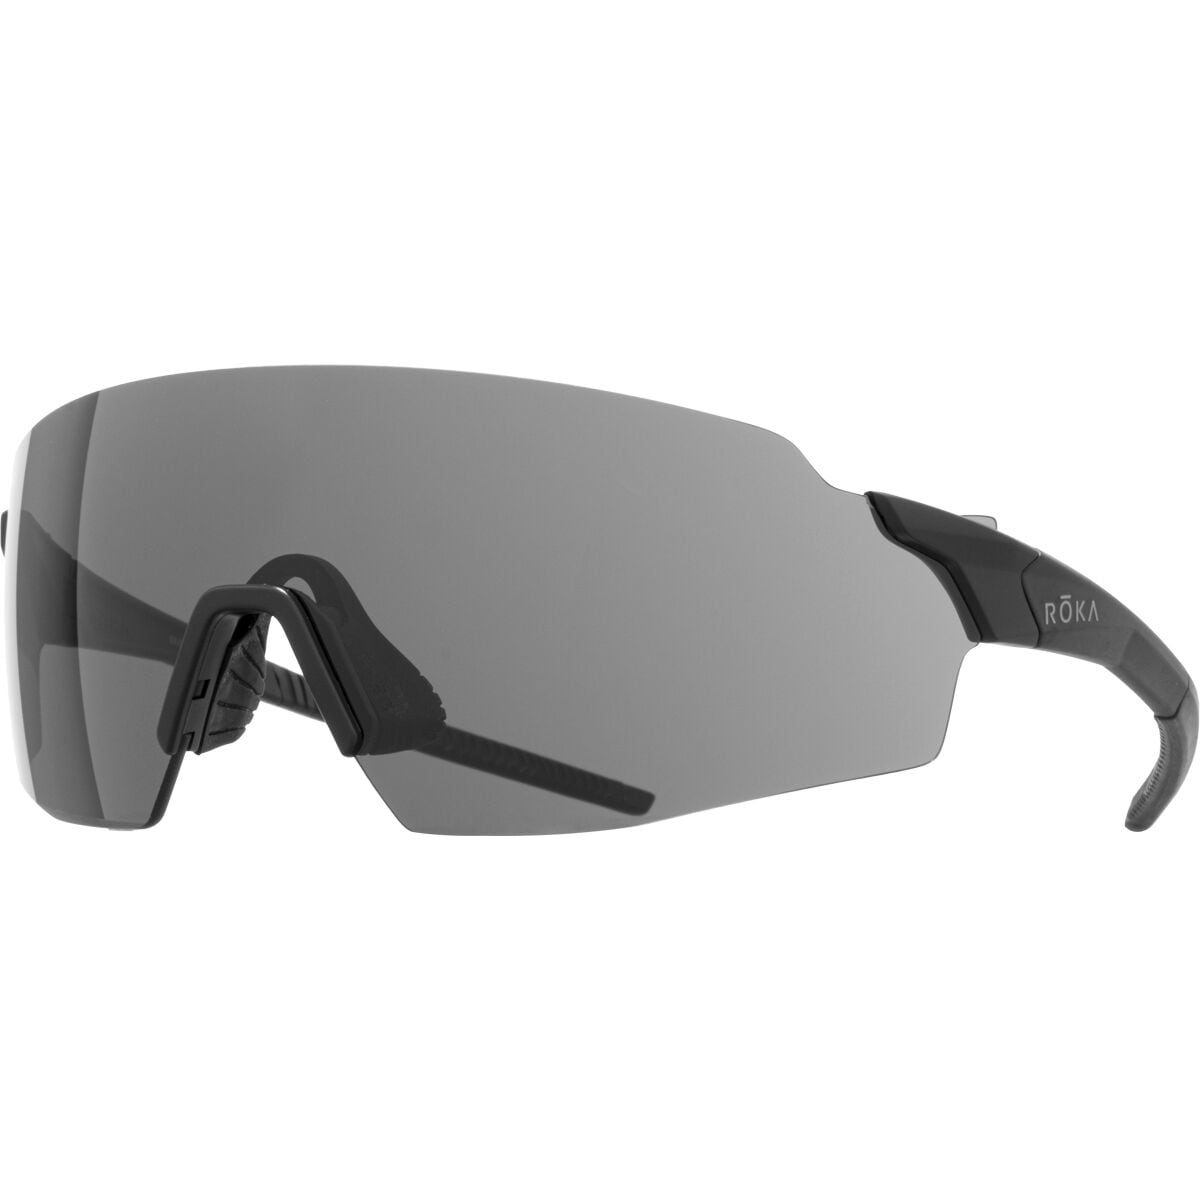 Roka SL-1x Cycling Sunglasses